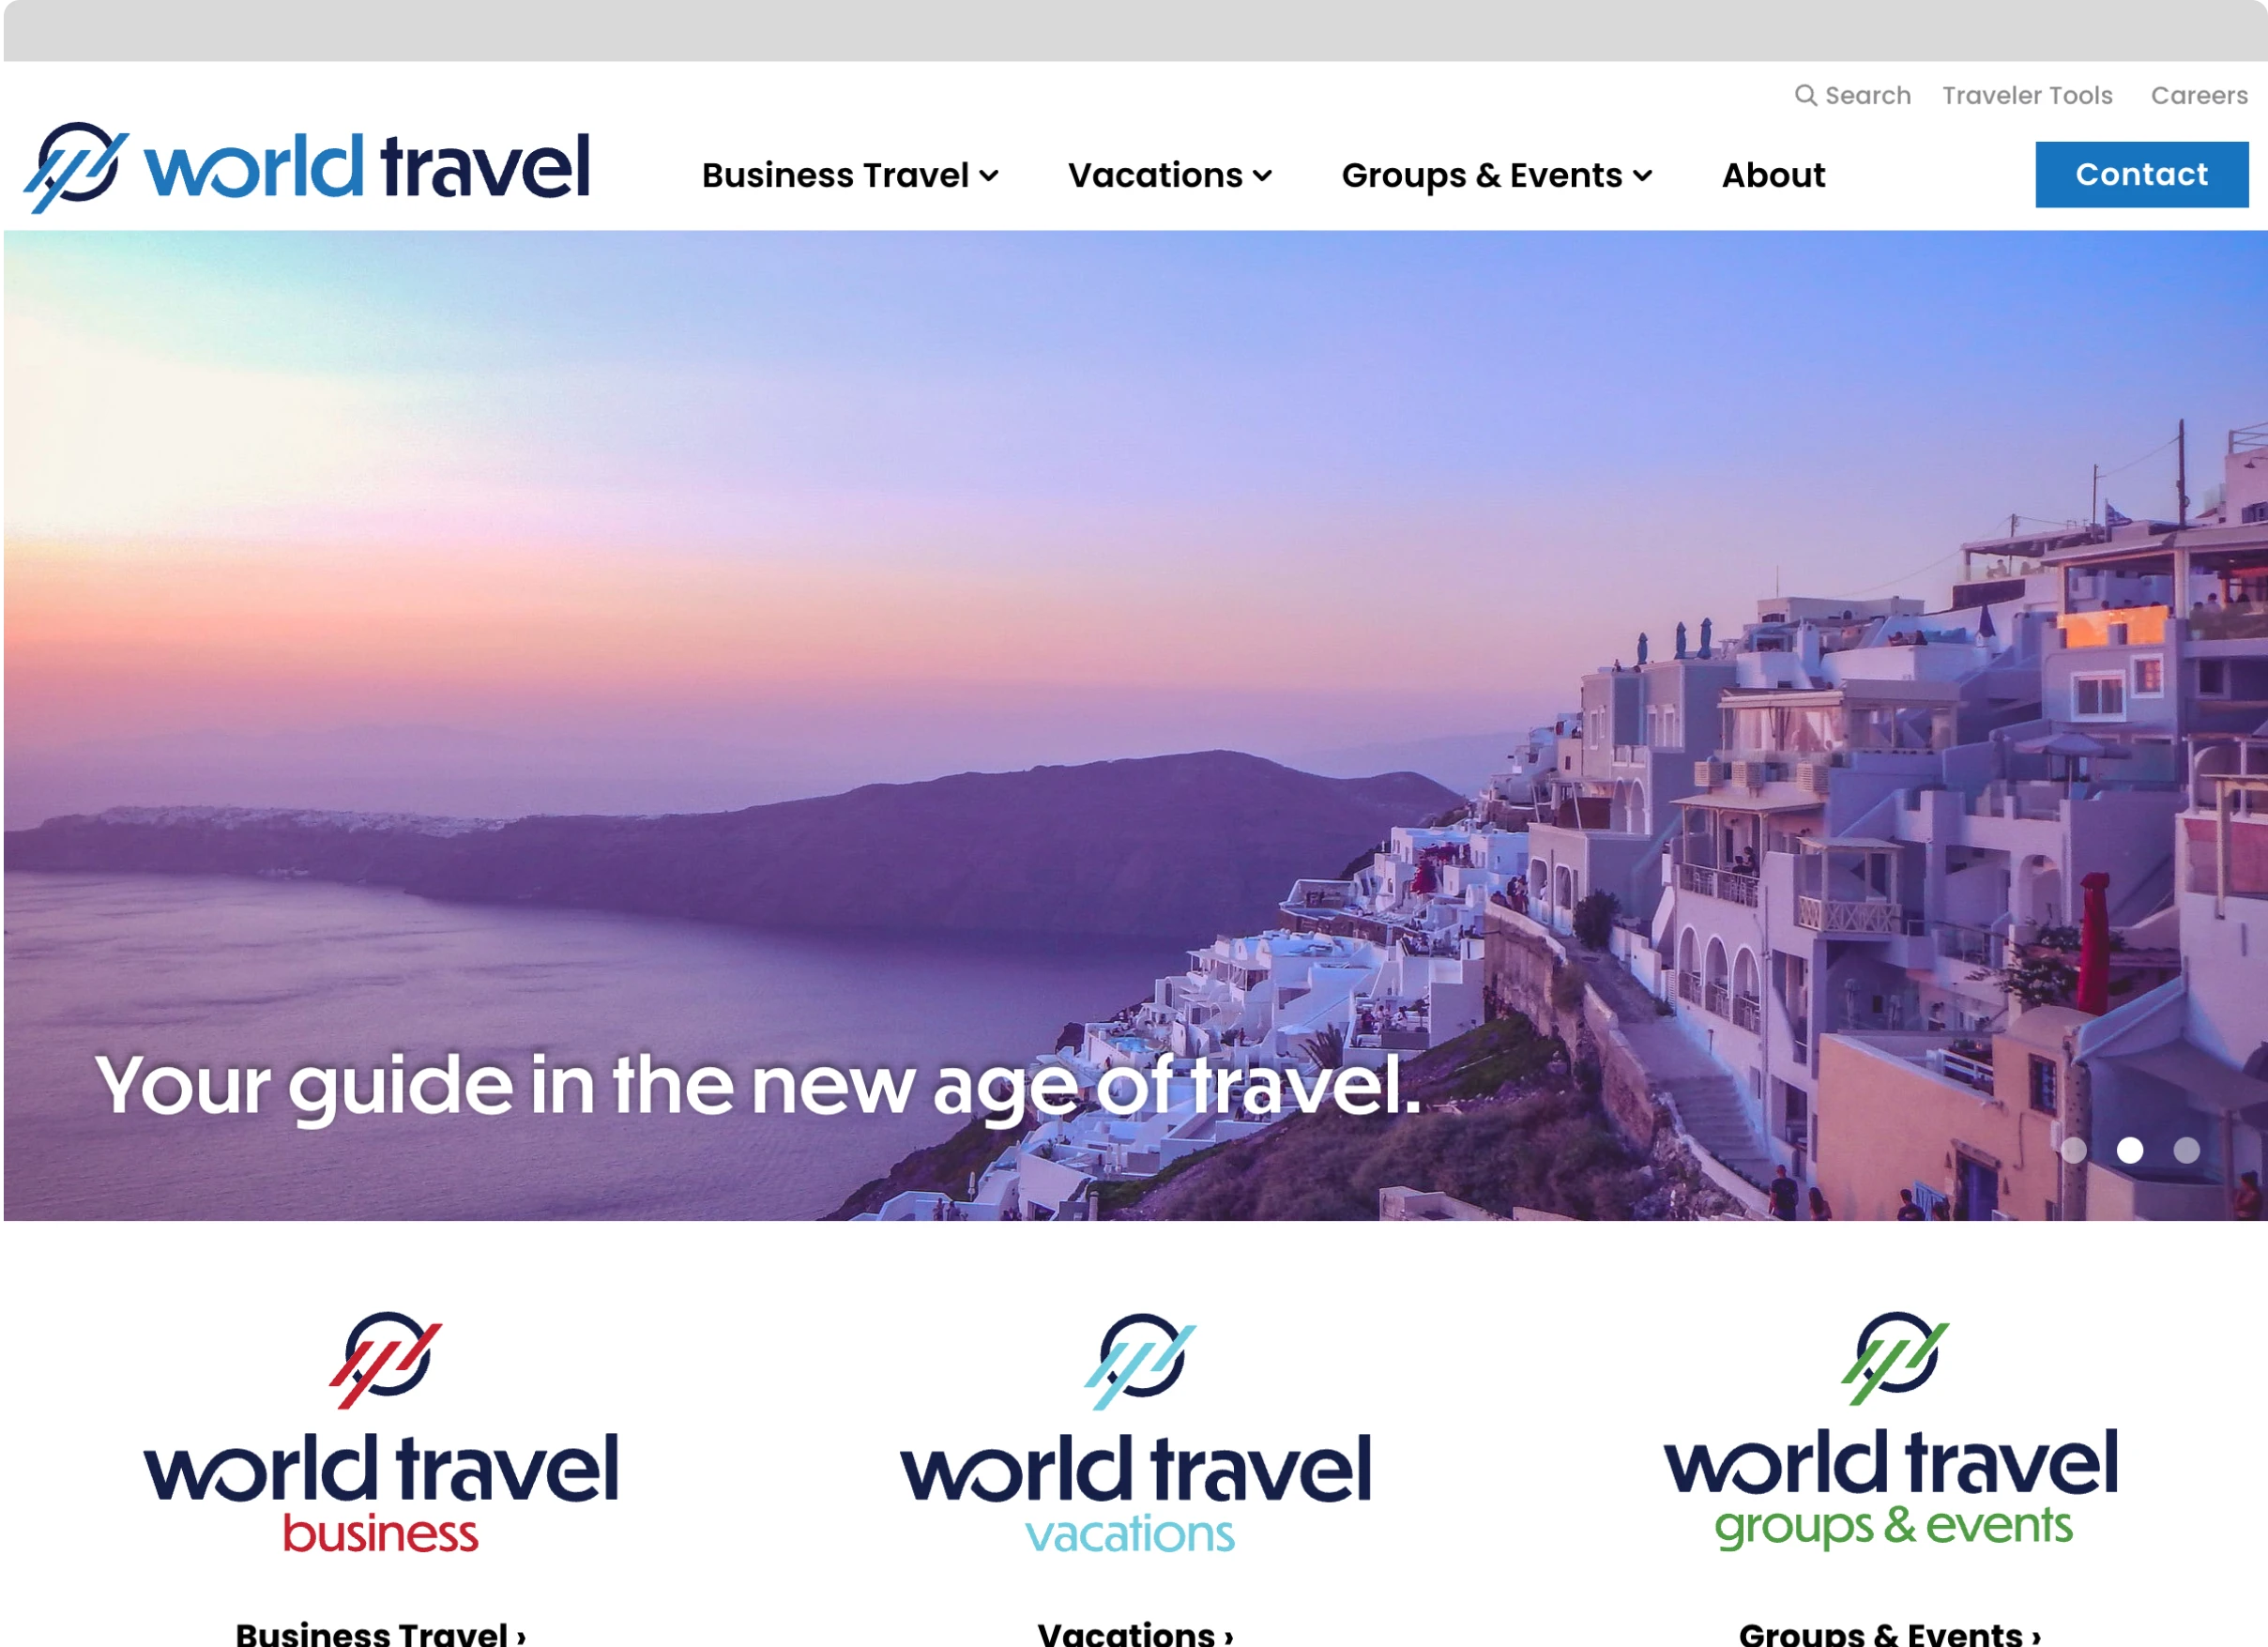 Screenshots of the World Travel website